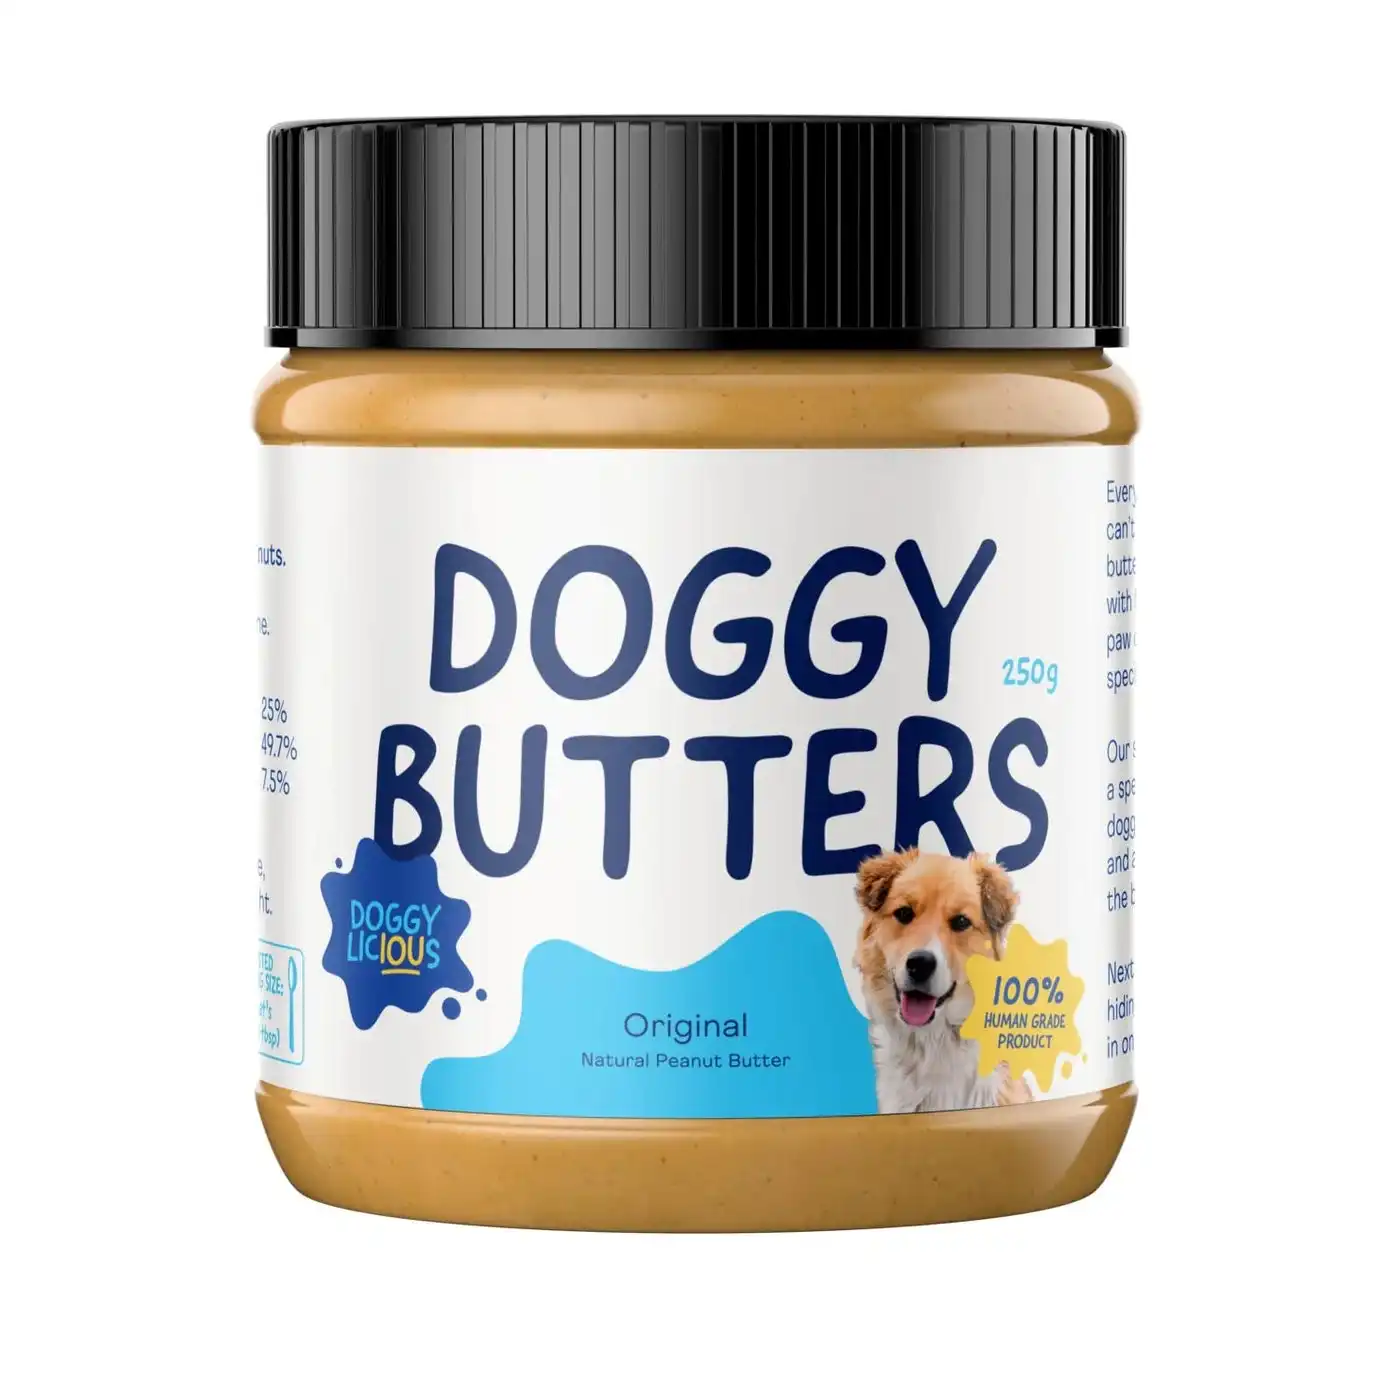 Doggylicious Original Doggy Peanut Butter 250g